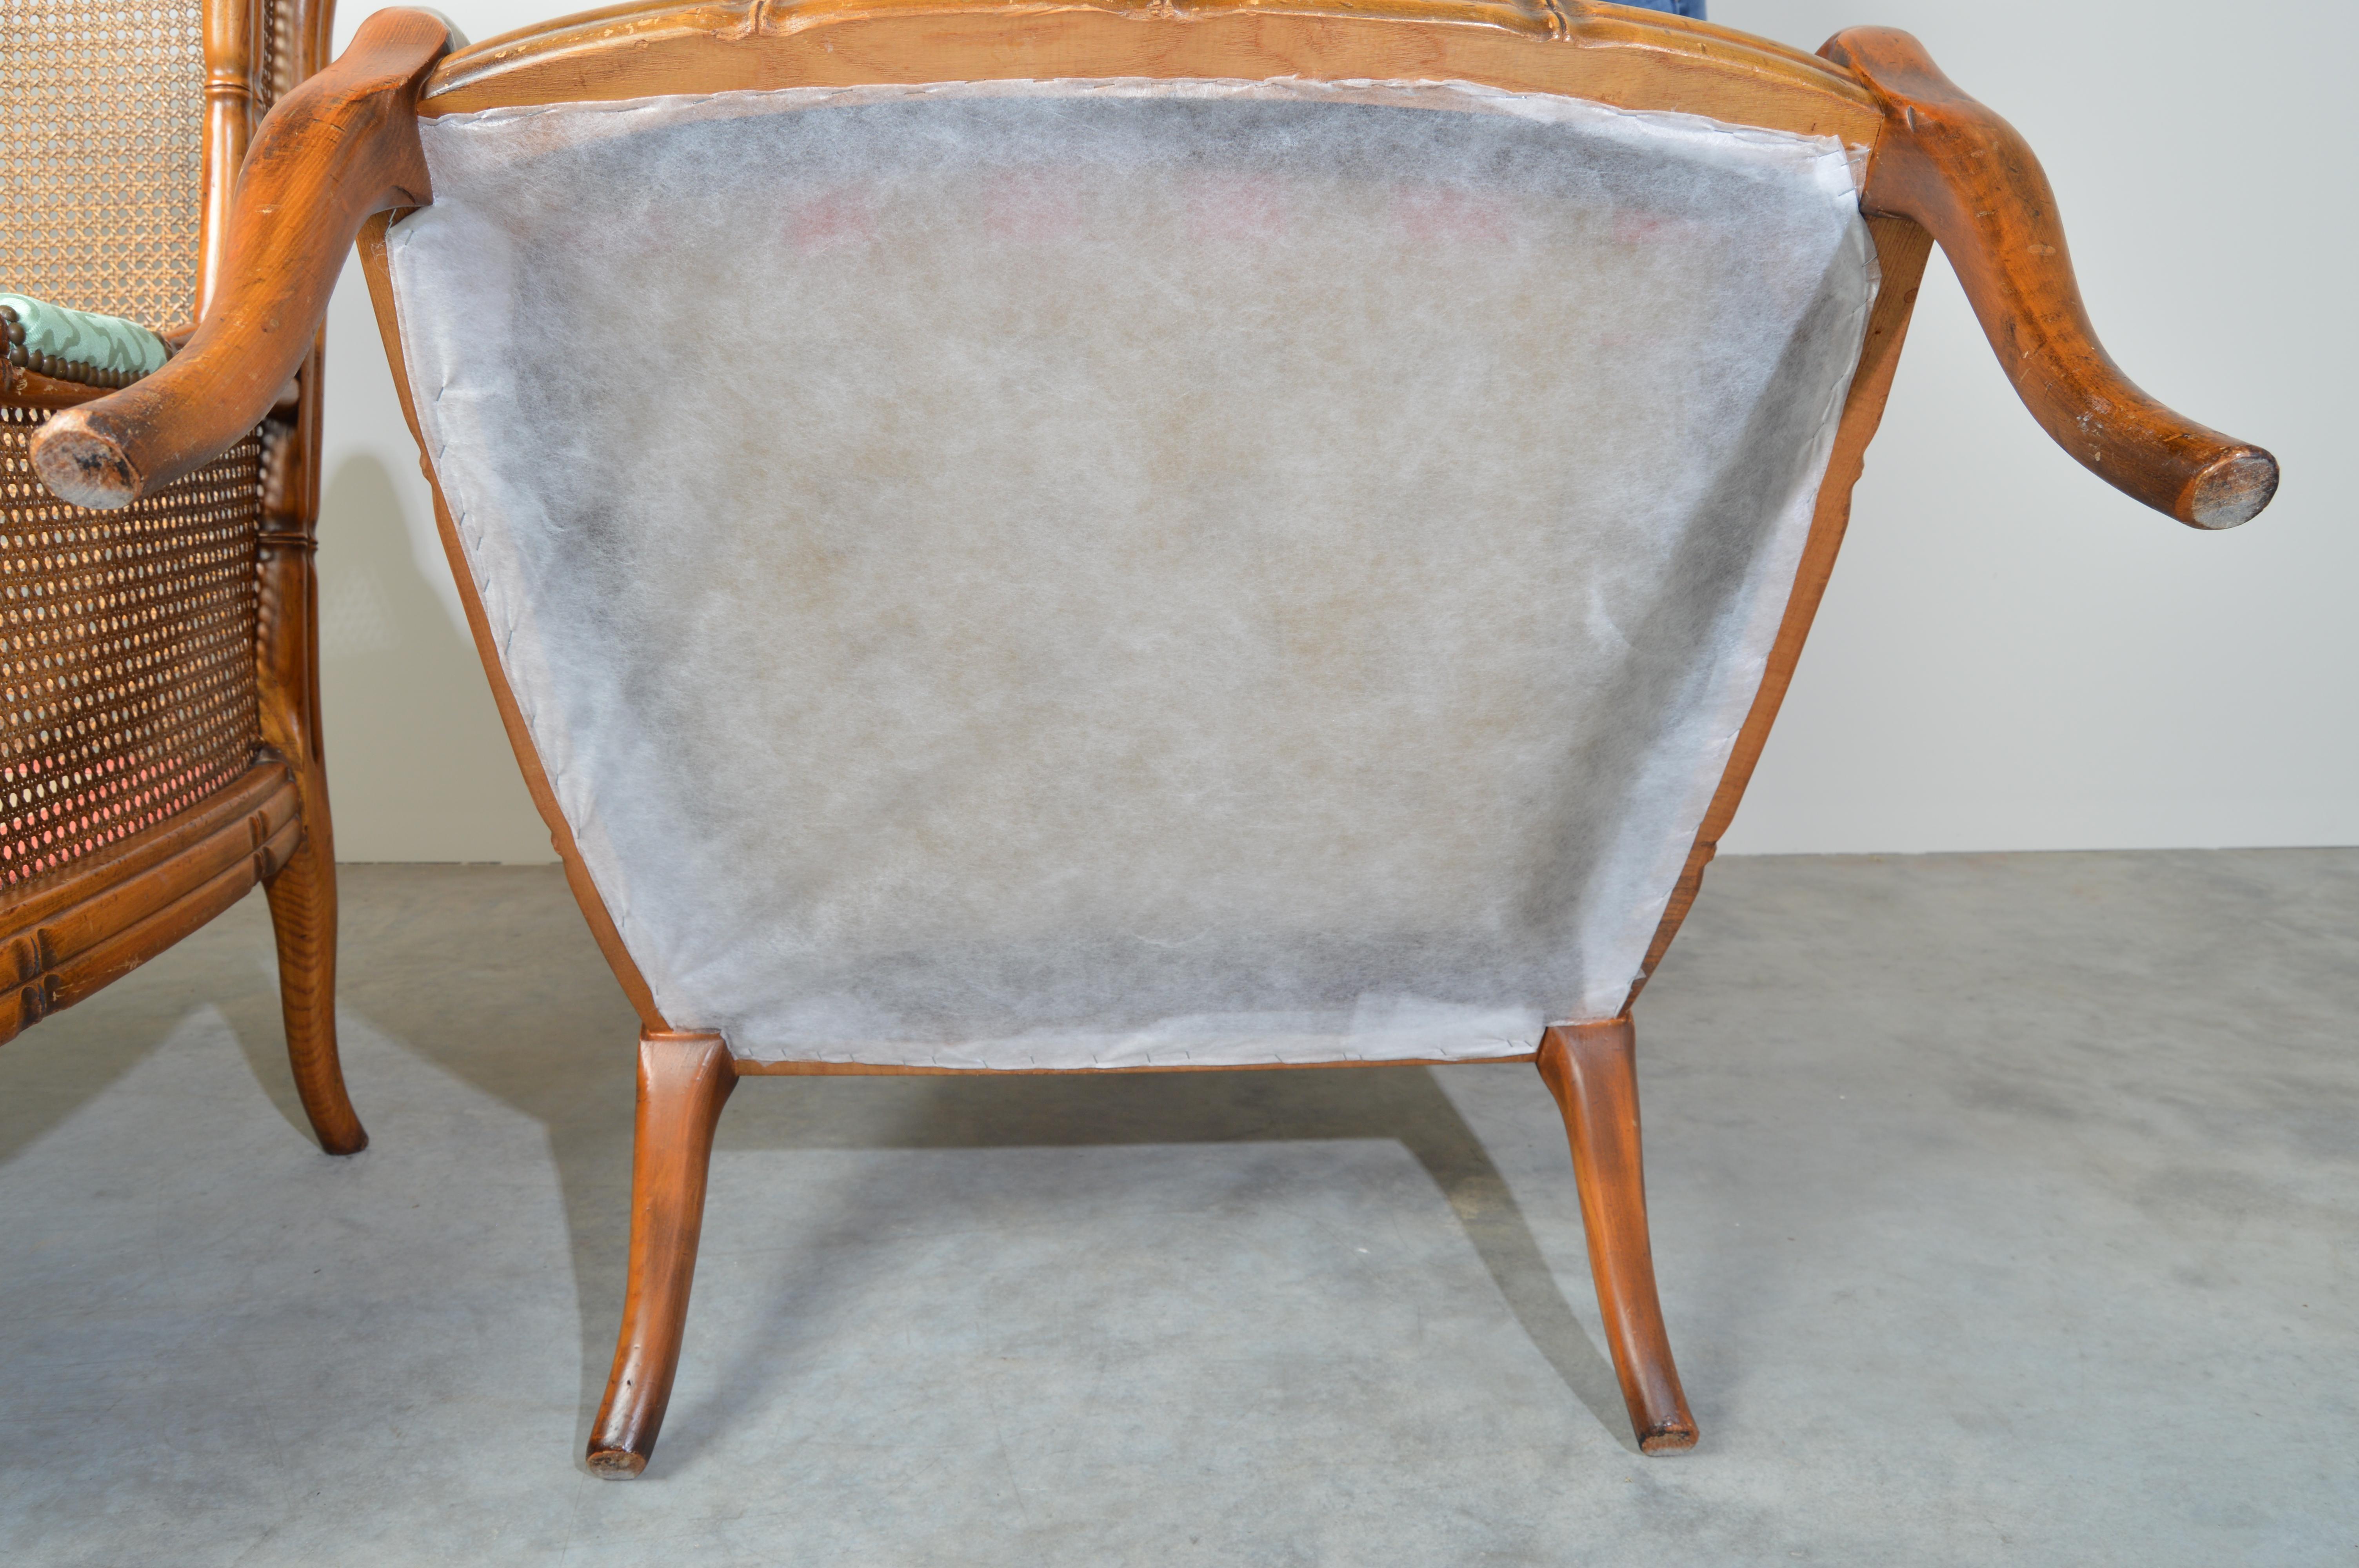 Vintage Midcentury Regency Style Faux Bamboo Boho Cane Wingback Chairs 1